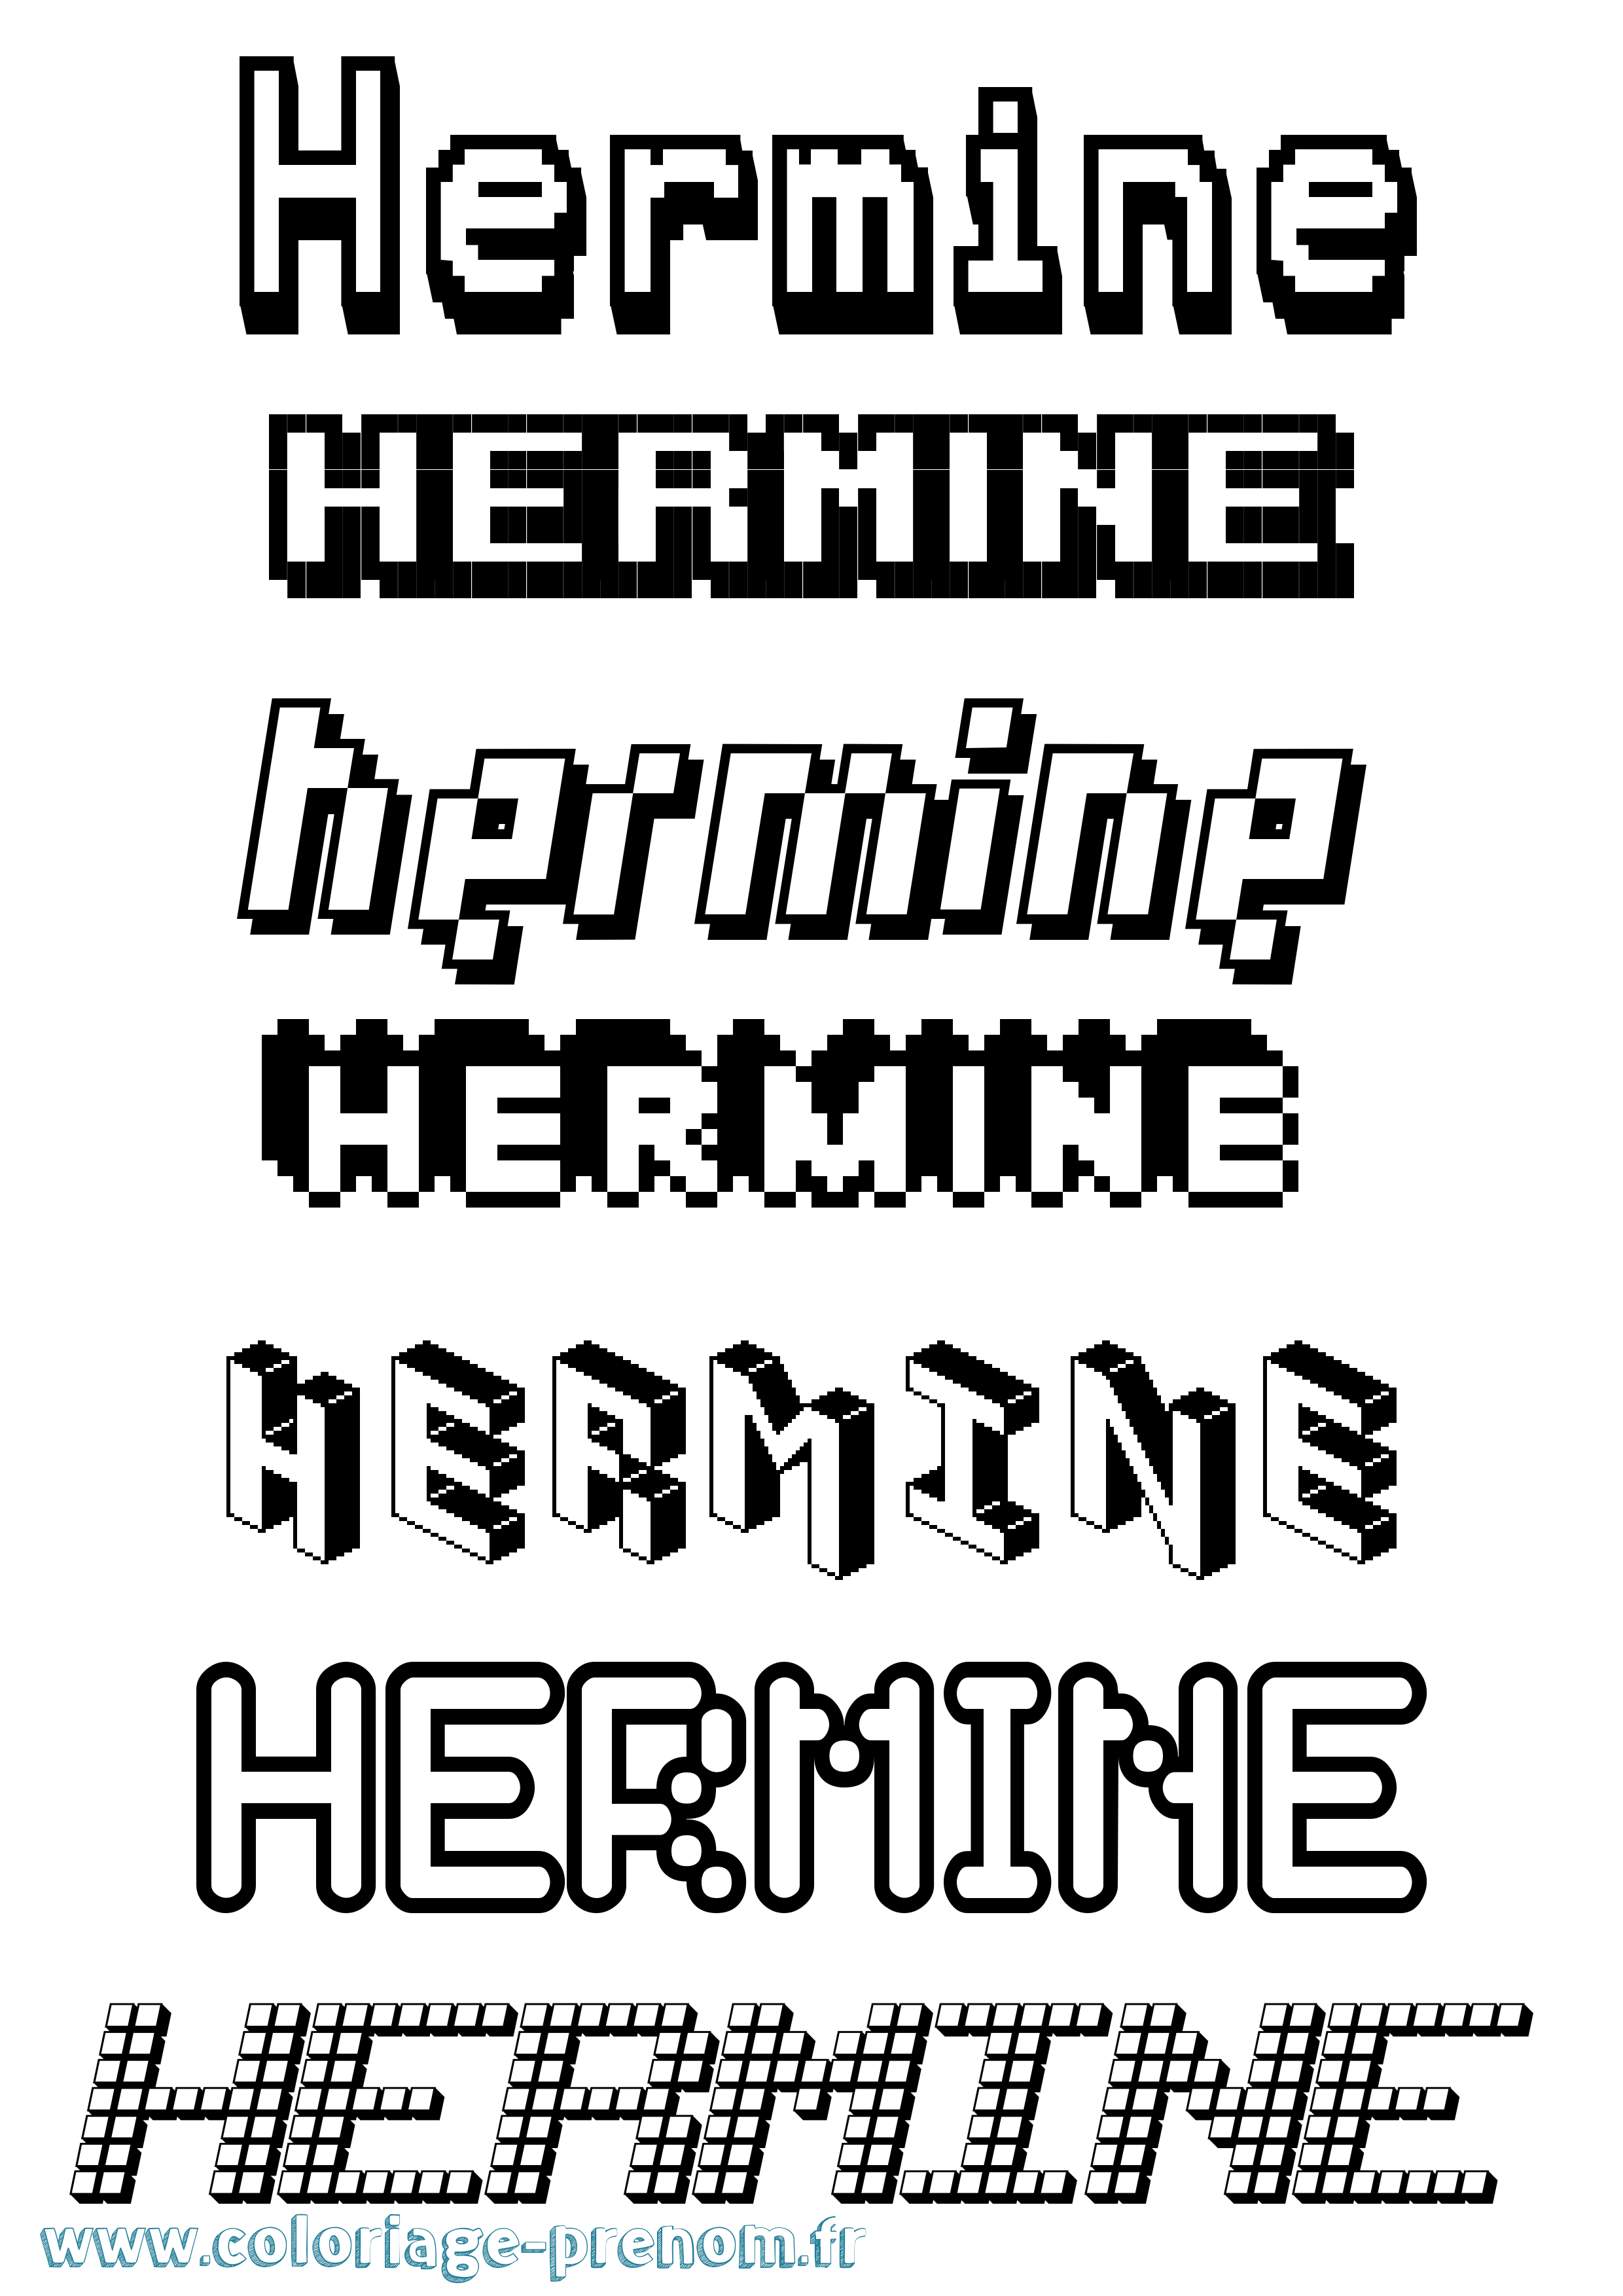 Coloriage prénom Hermine Pixel